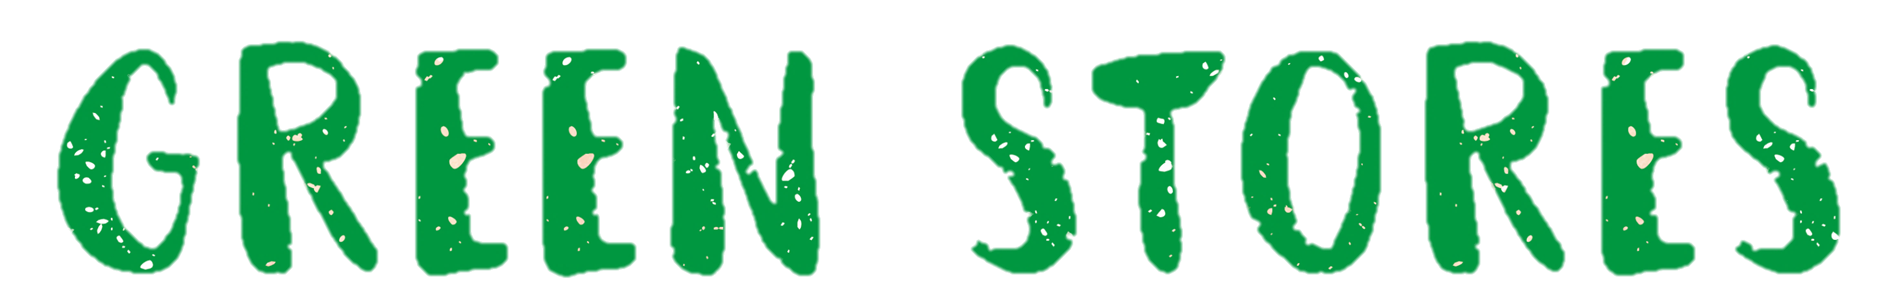 GS18_Logo_年号抜き3